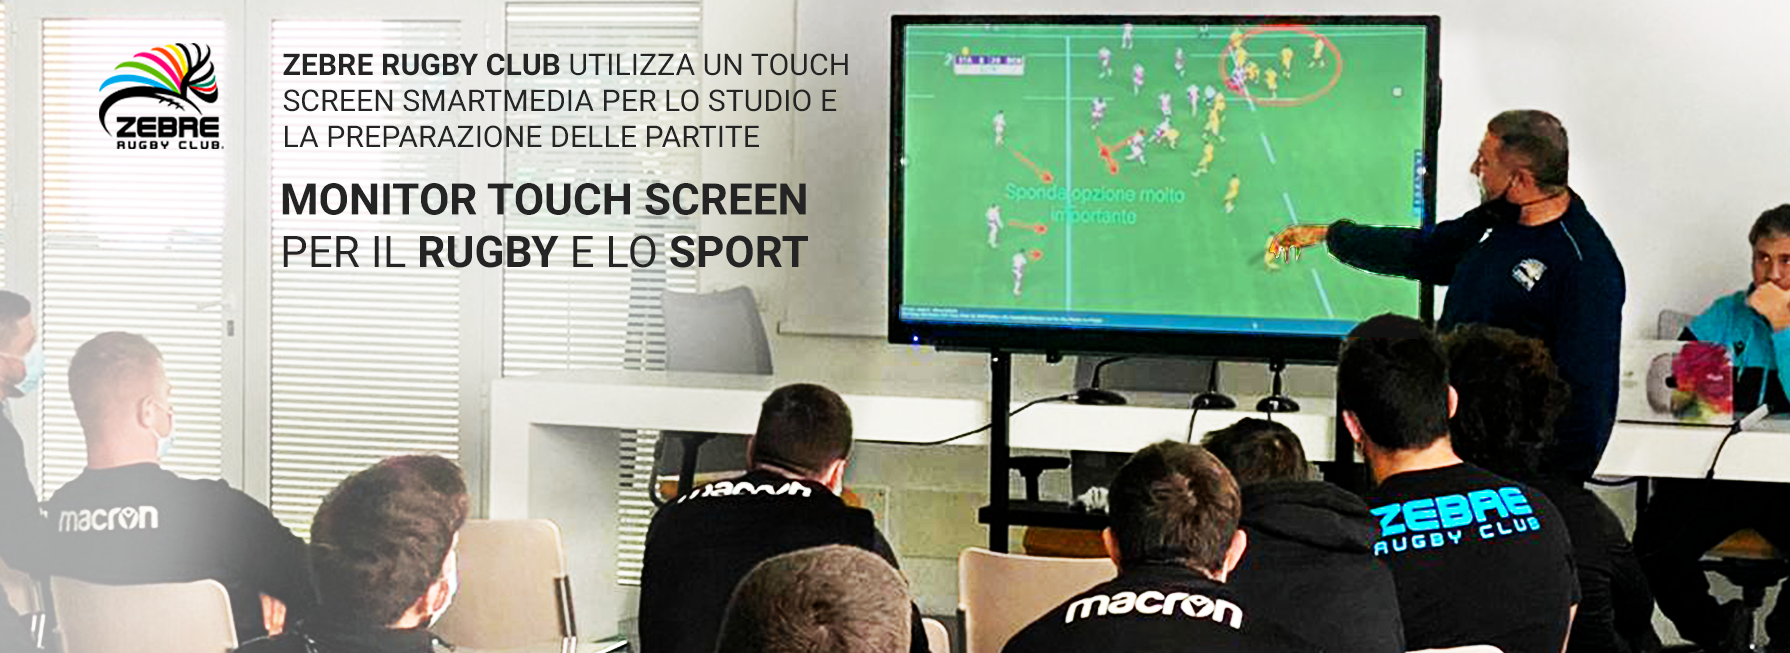 Zebre Rugby Club sceglie i monitor touch screen SmartMedia